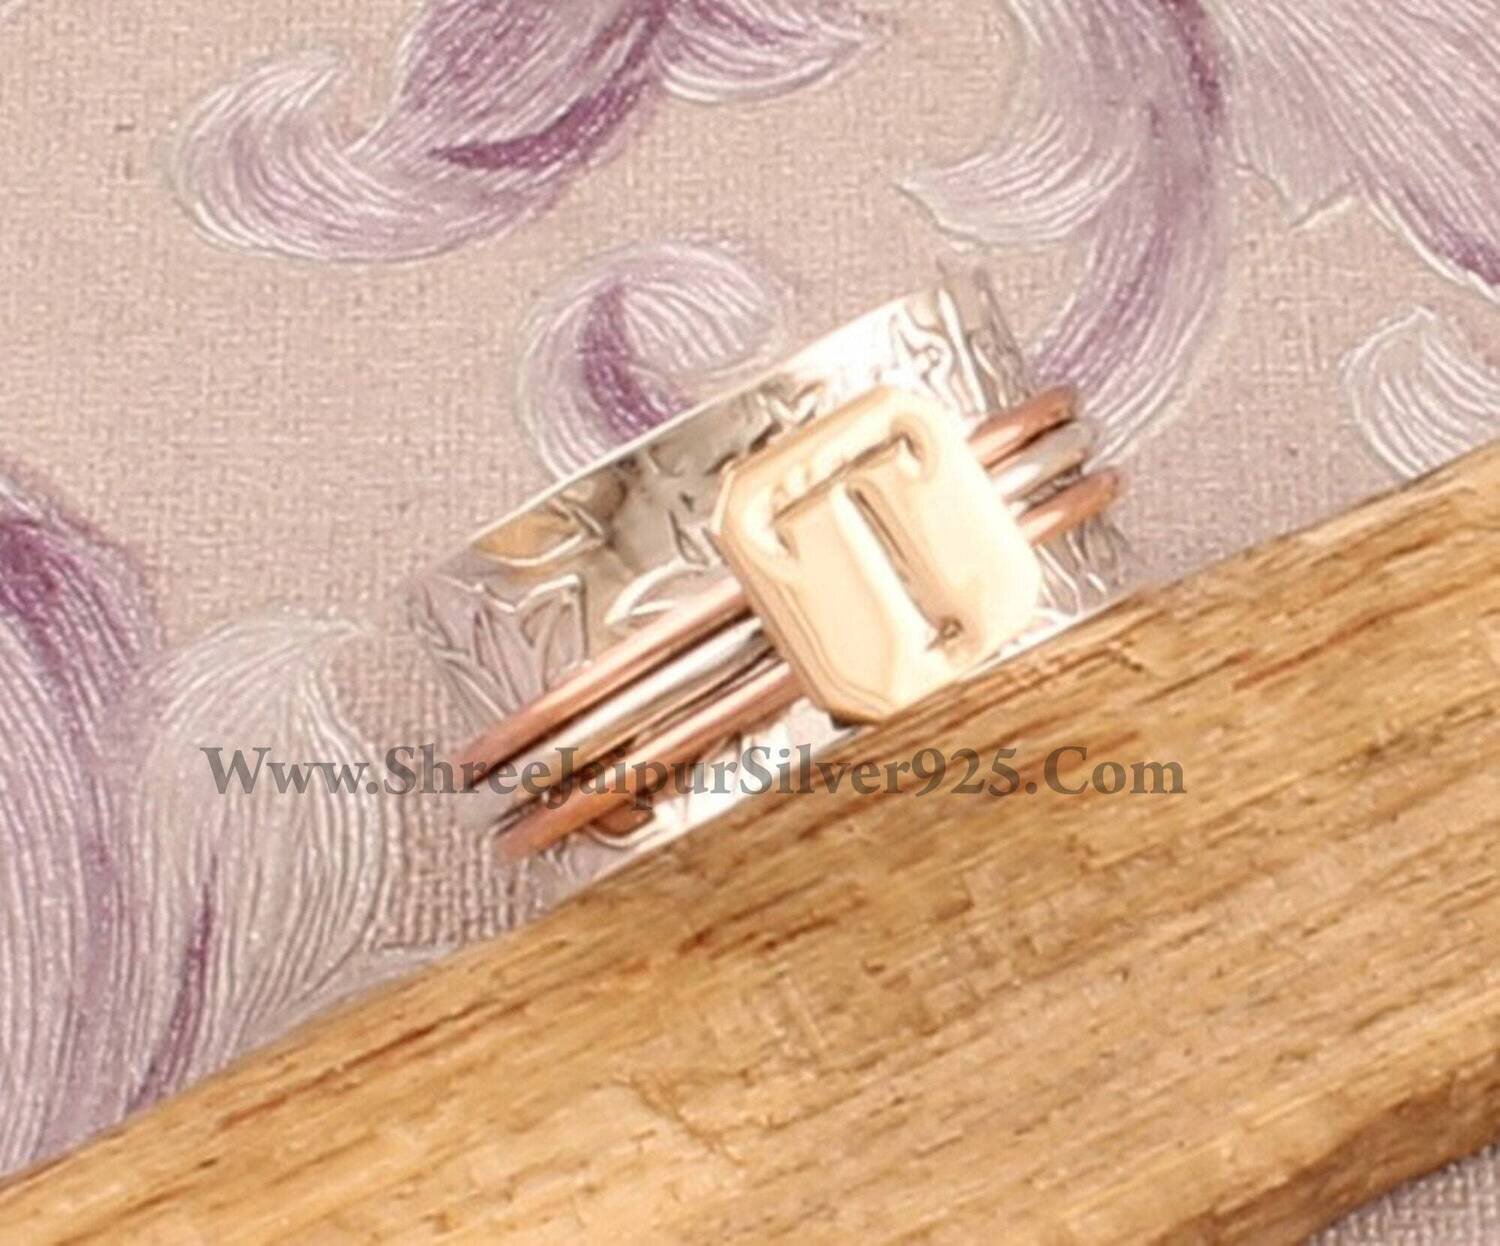 Spinner Initial Ring, 925 Sterling Silver & Brass Initial Ring, Handmade Custom Letter Spinner Ring, Personalized Ring Capital Alphabet Ring